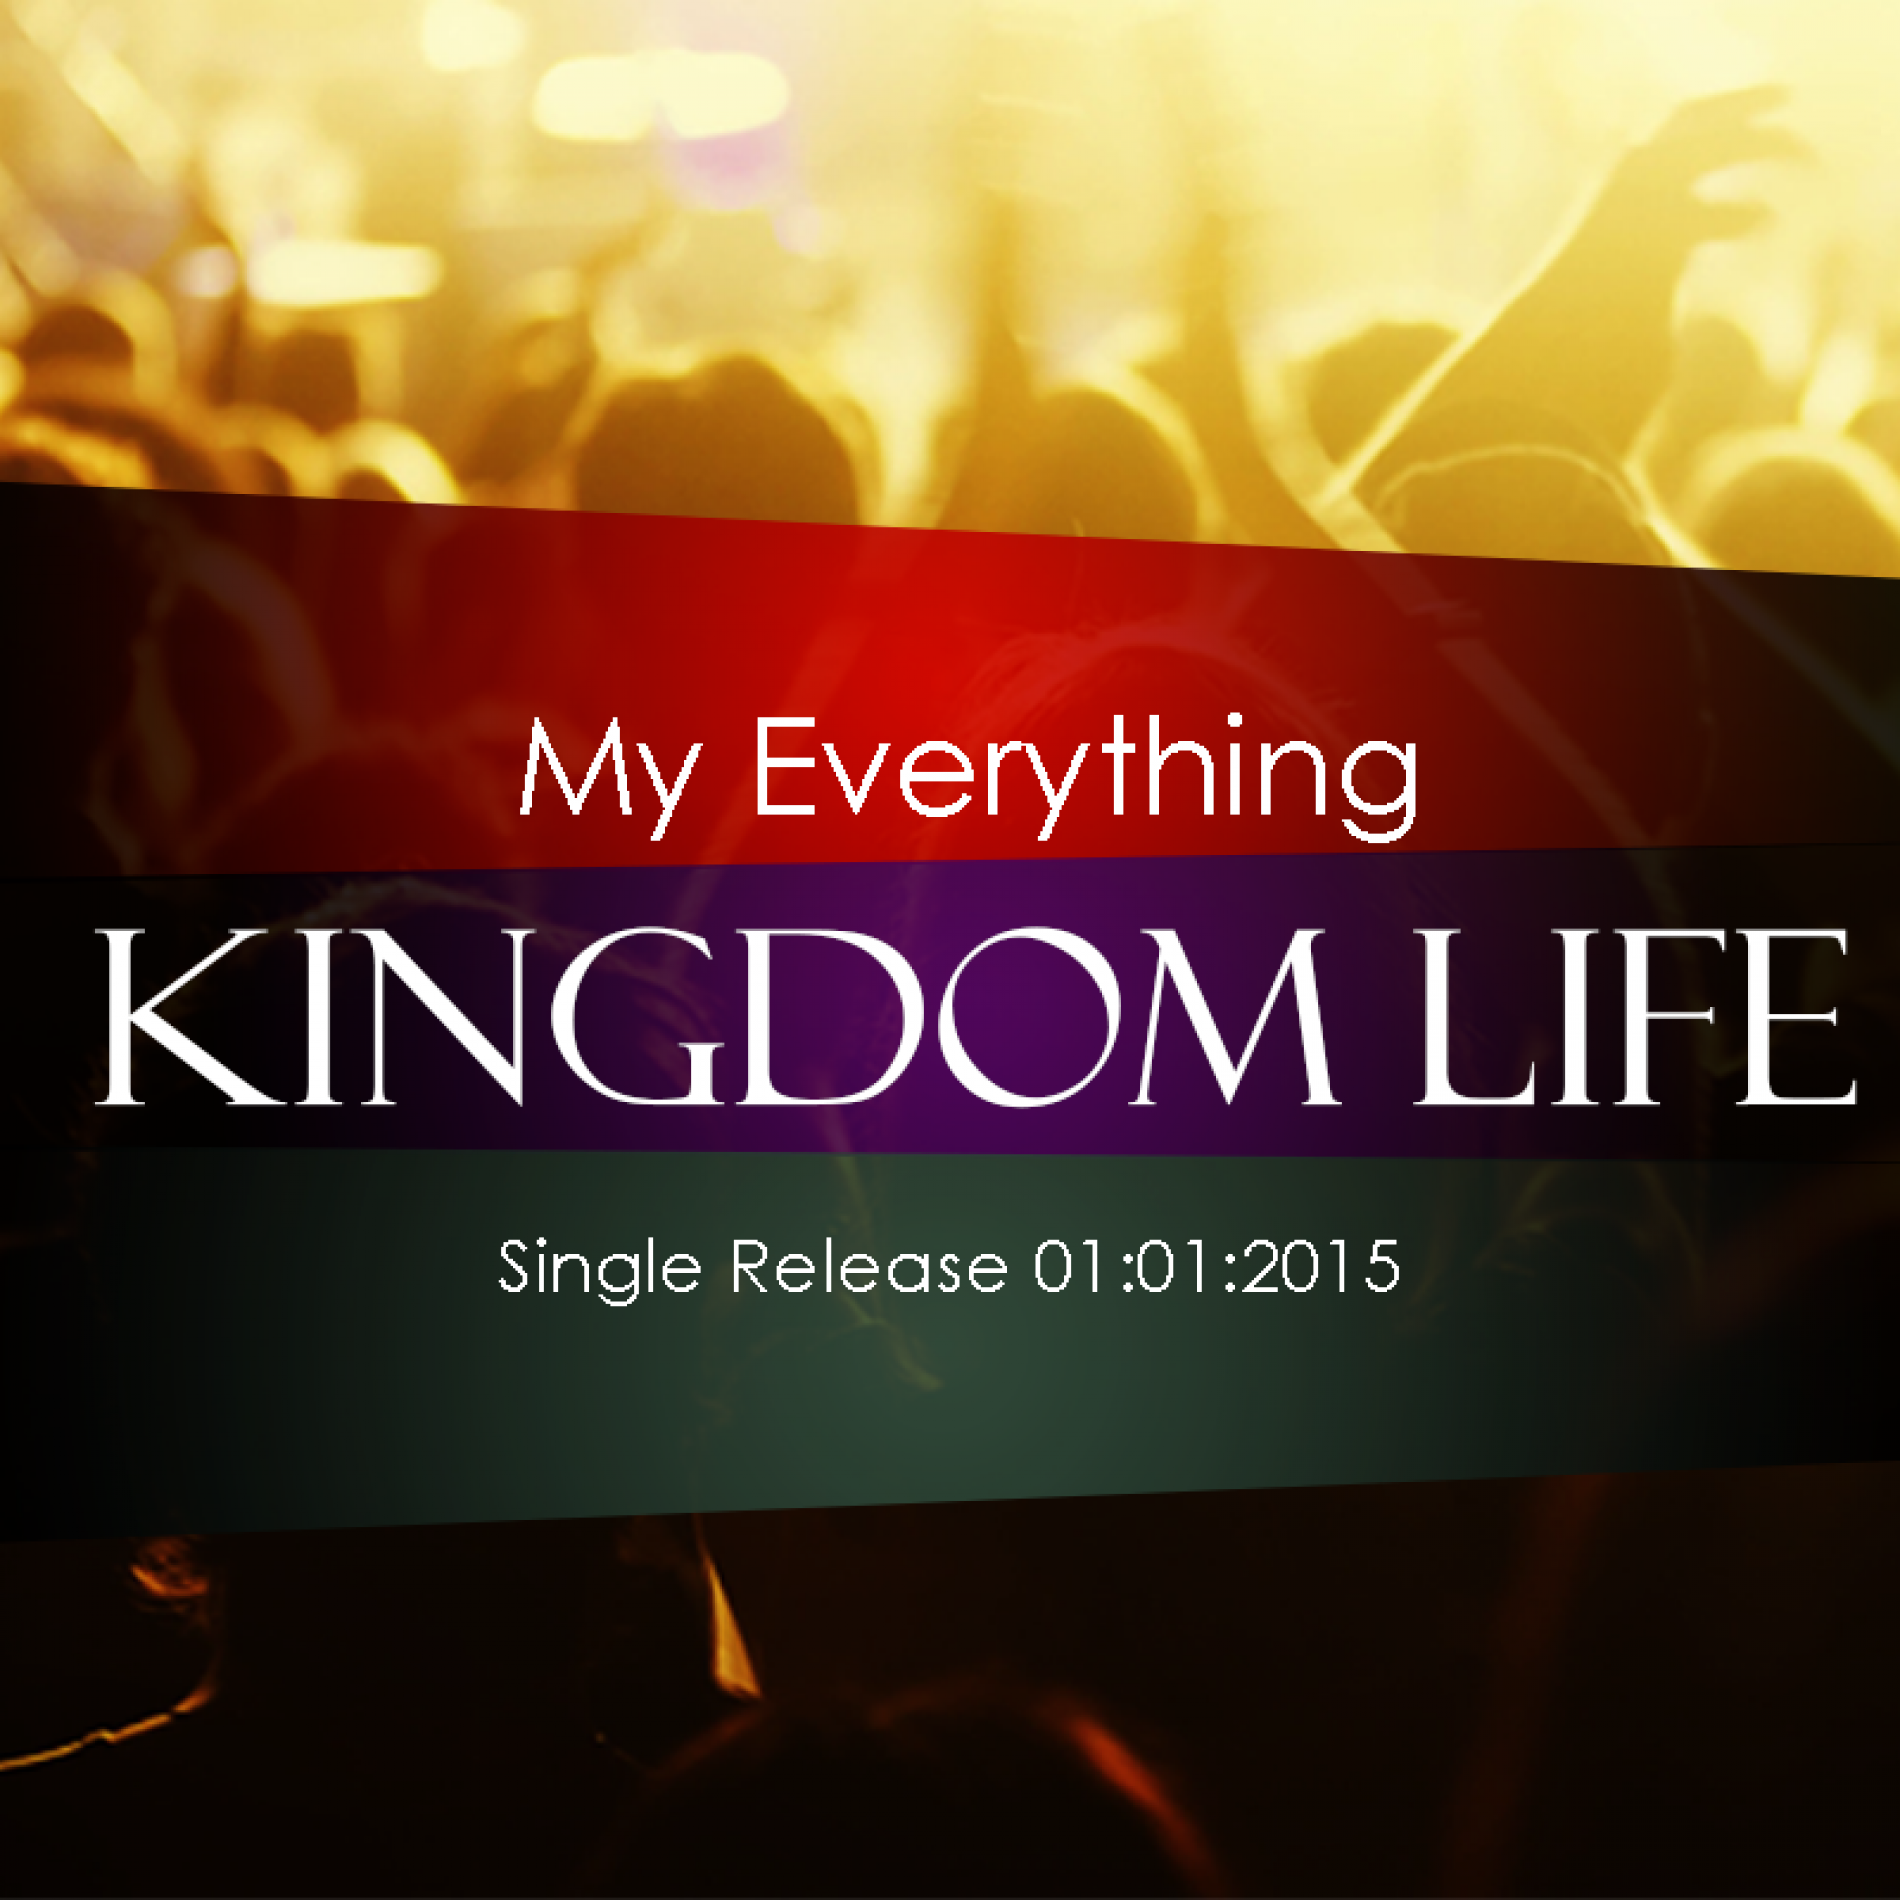 Kingdom Life: My Everything